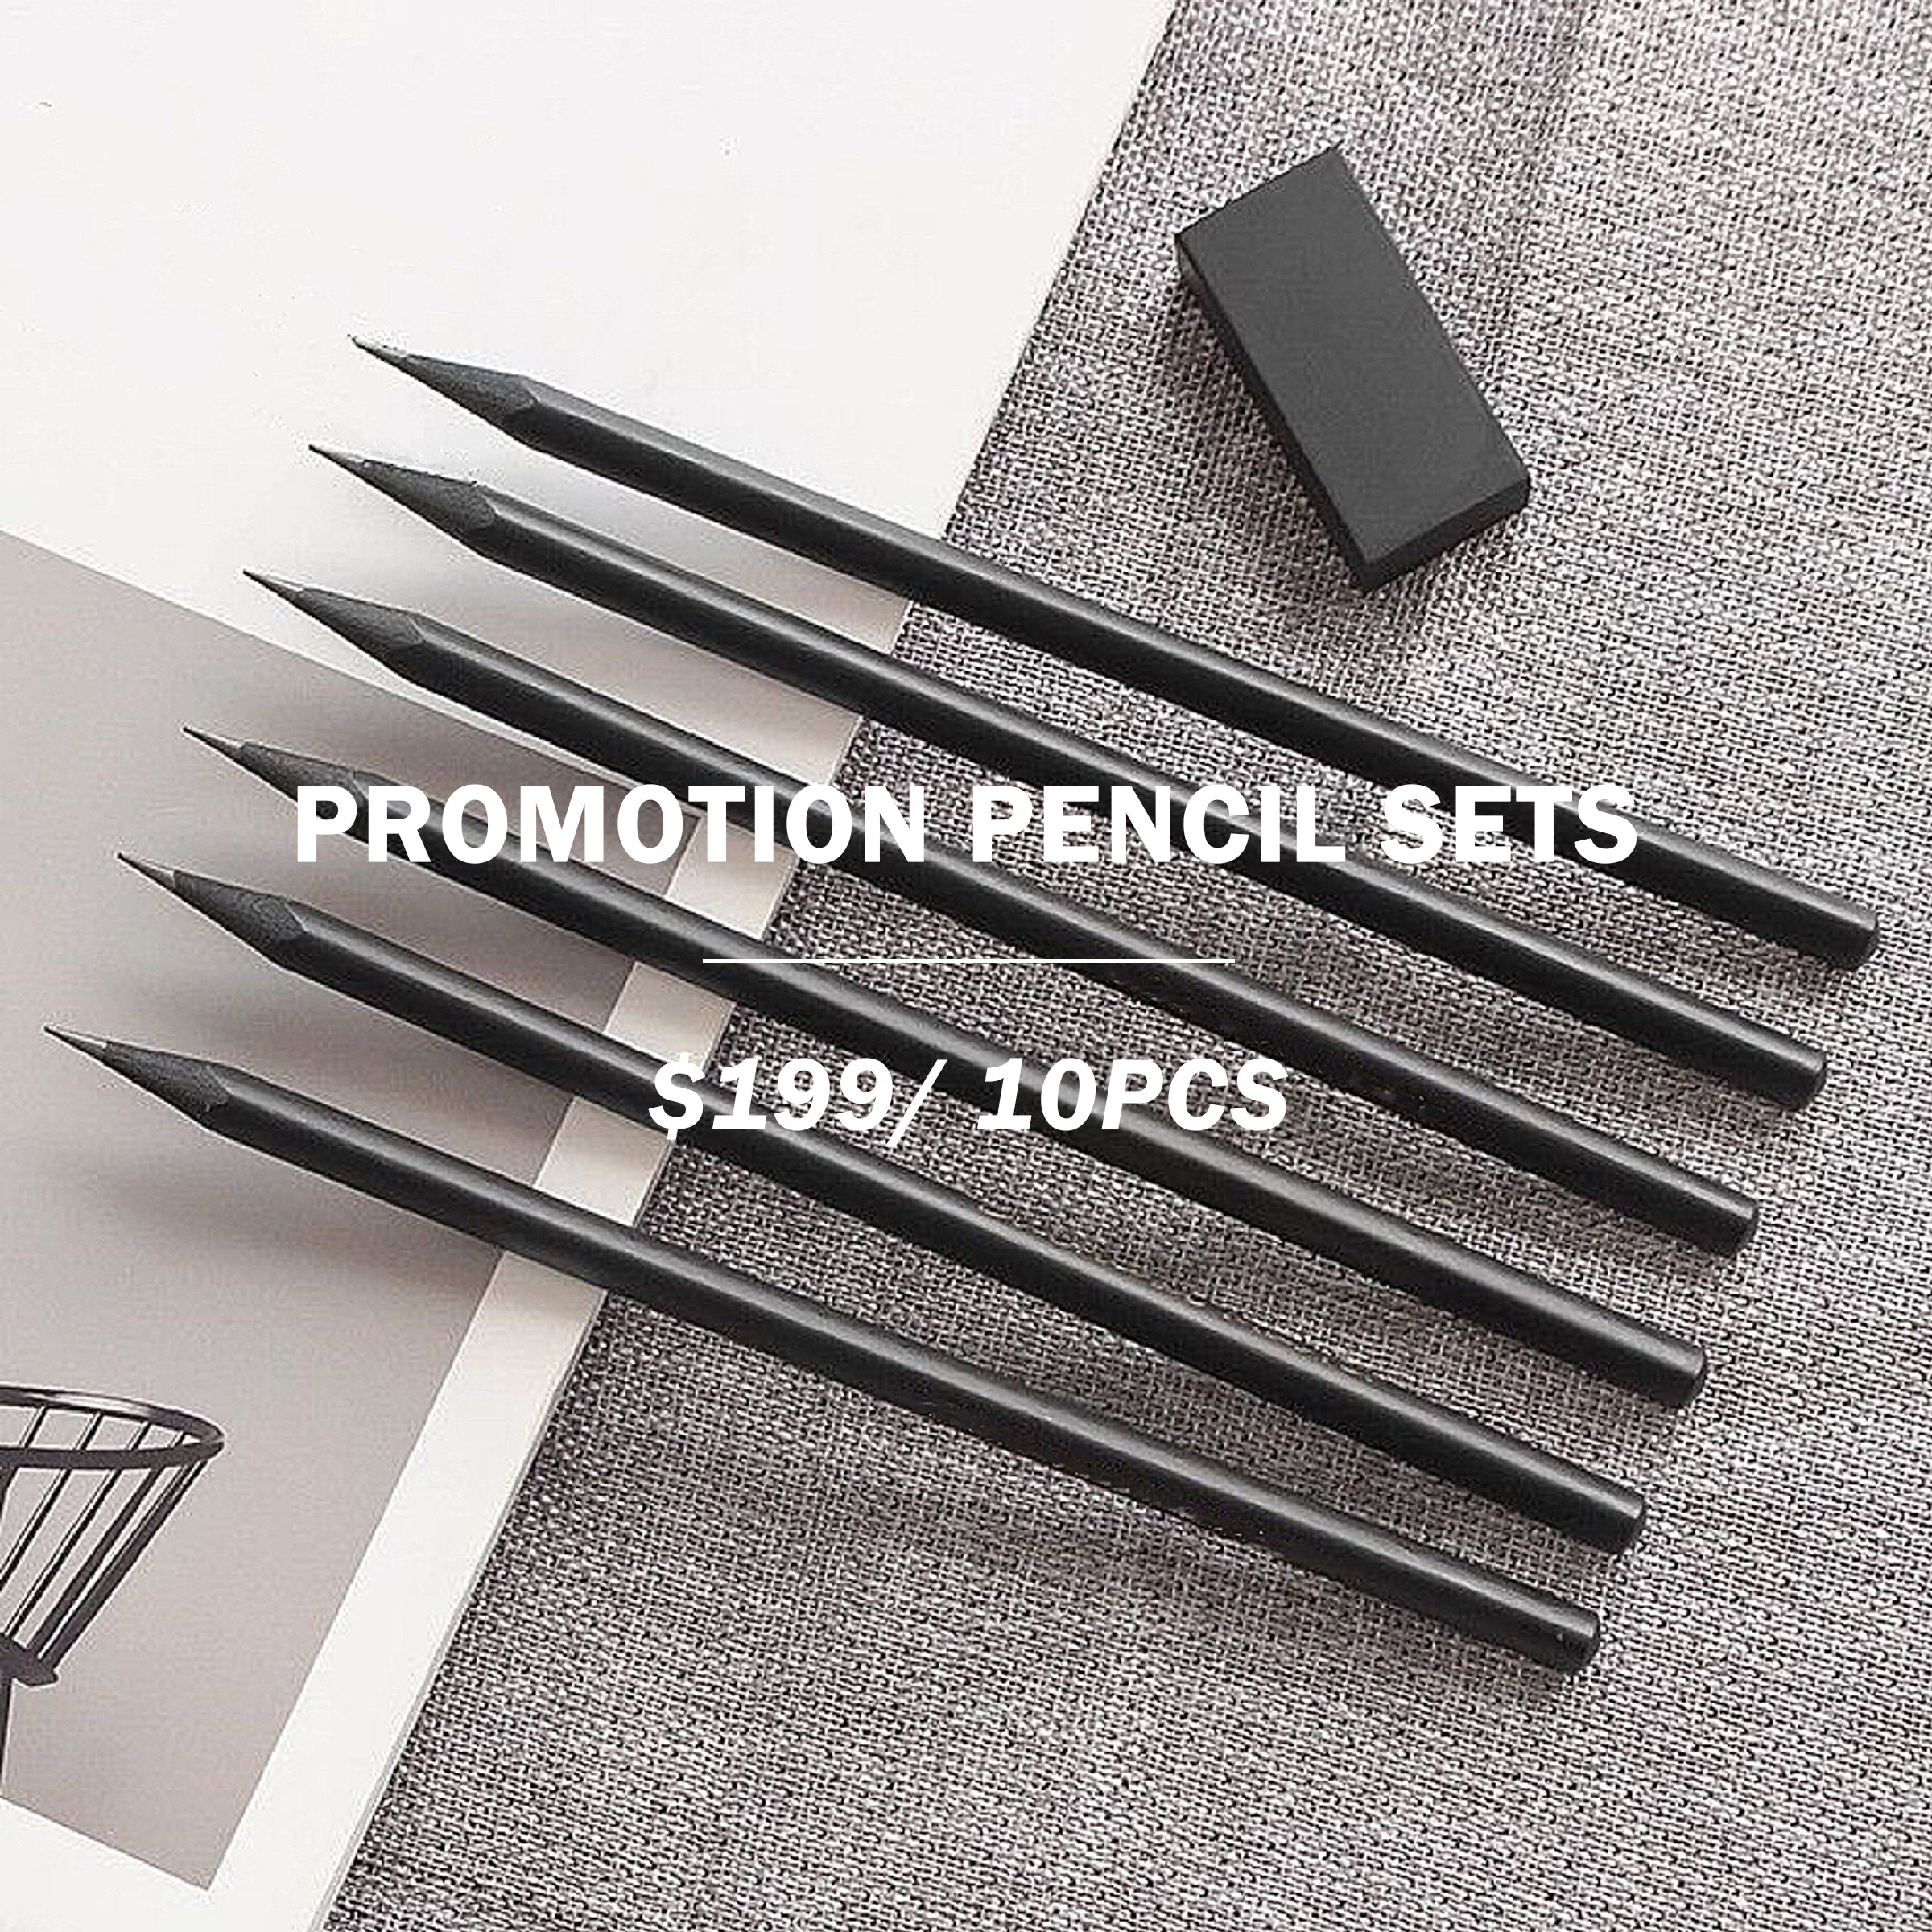 【TRAVEL GIFTS】Creative prncil &minimalistic pencil printing logo x 10 pcs | 創意鉛筆10件套訂製 鉛筆訂製